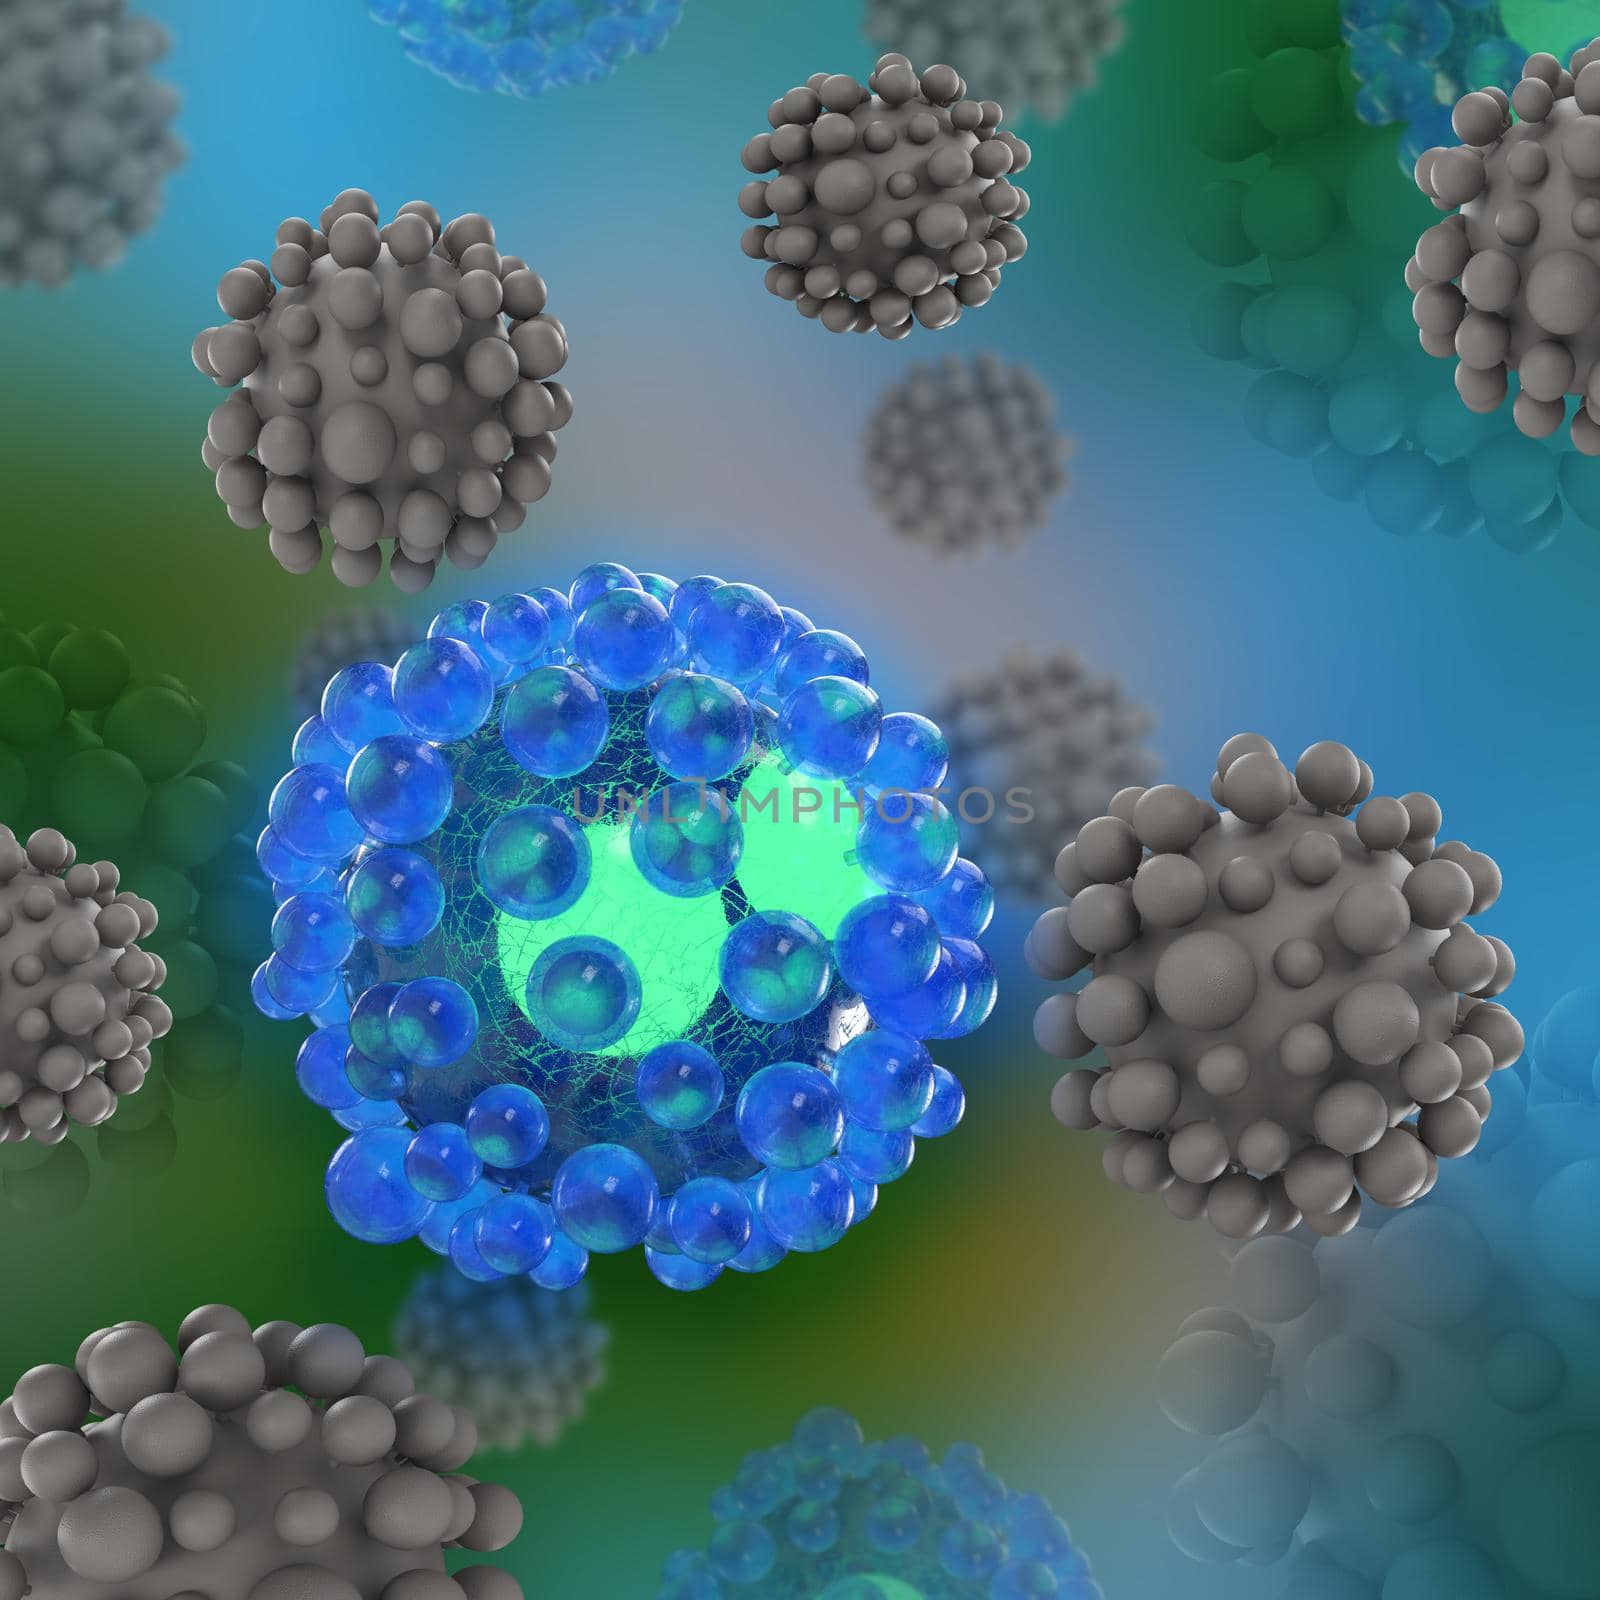 Abstract sciense 3d corona virus outbreak illustration by kisika